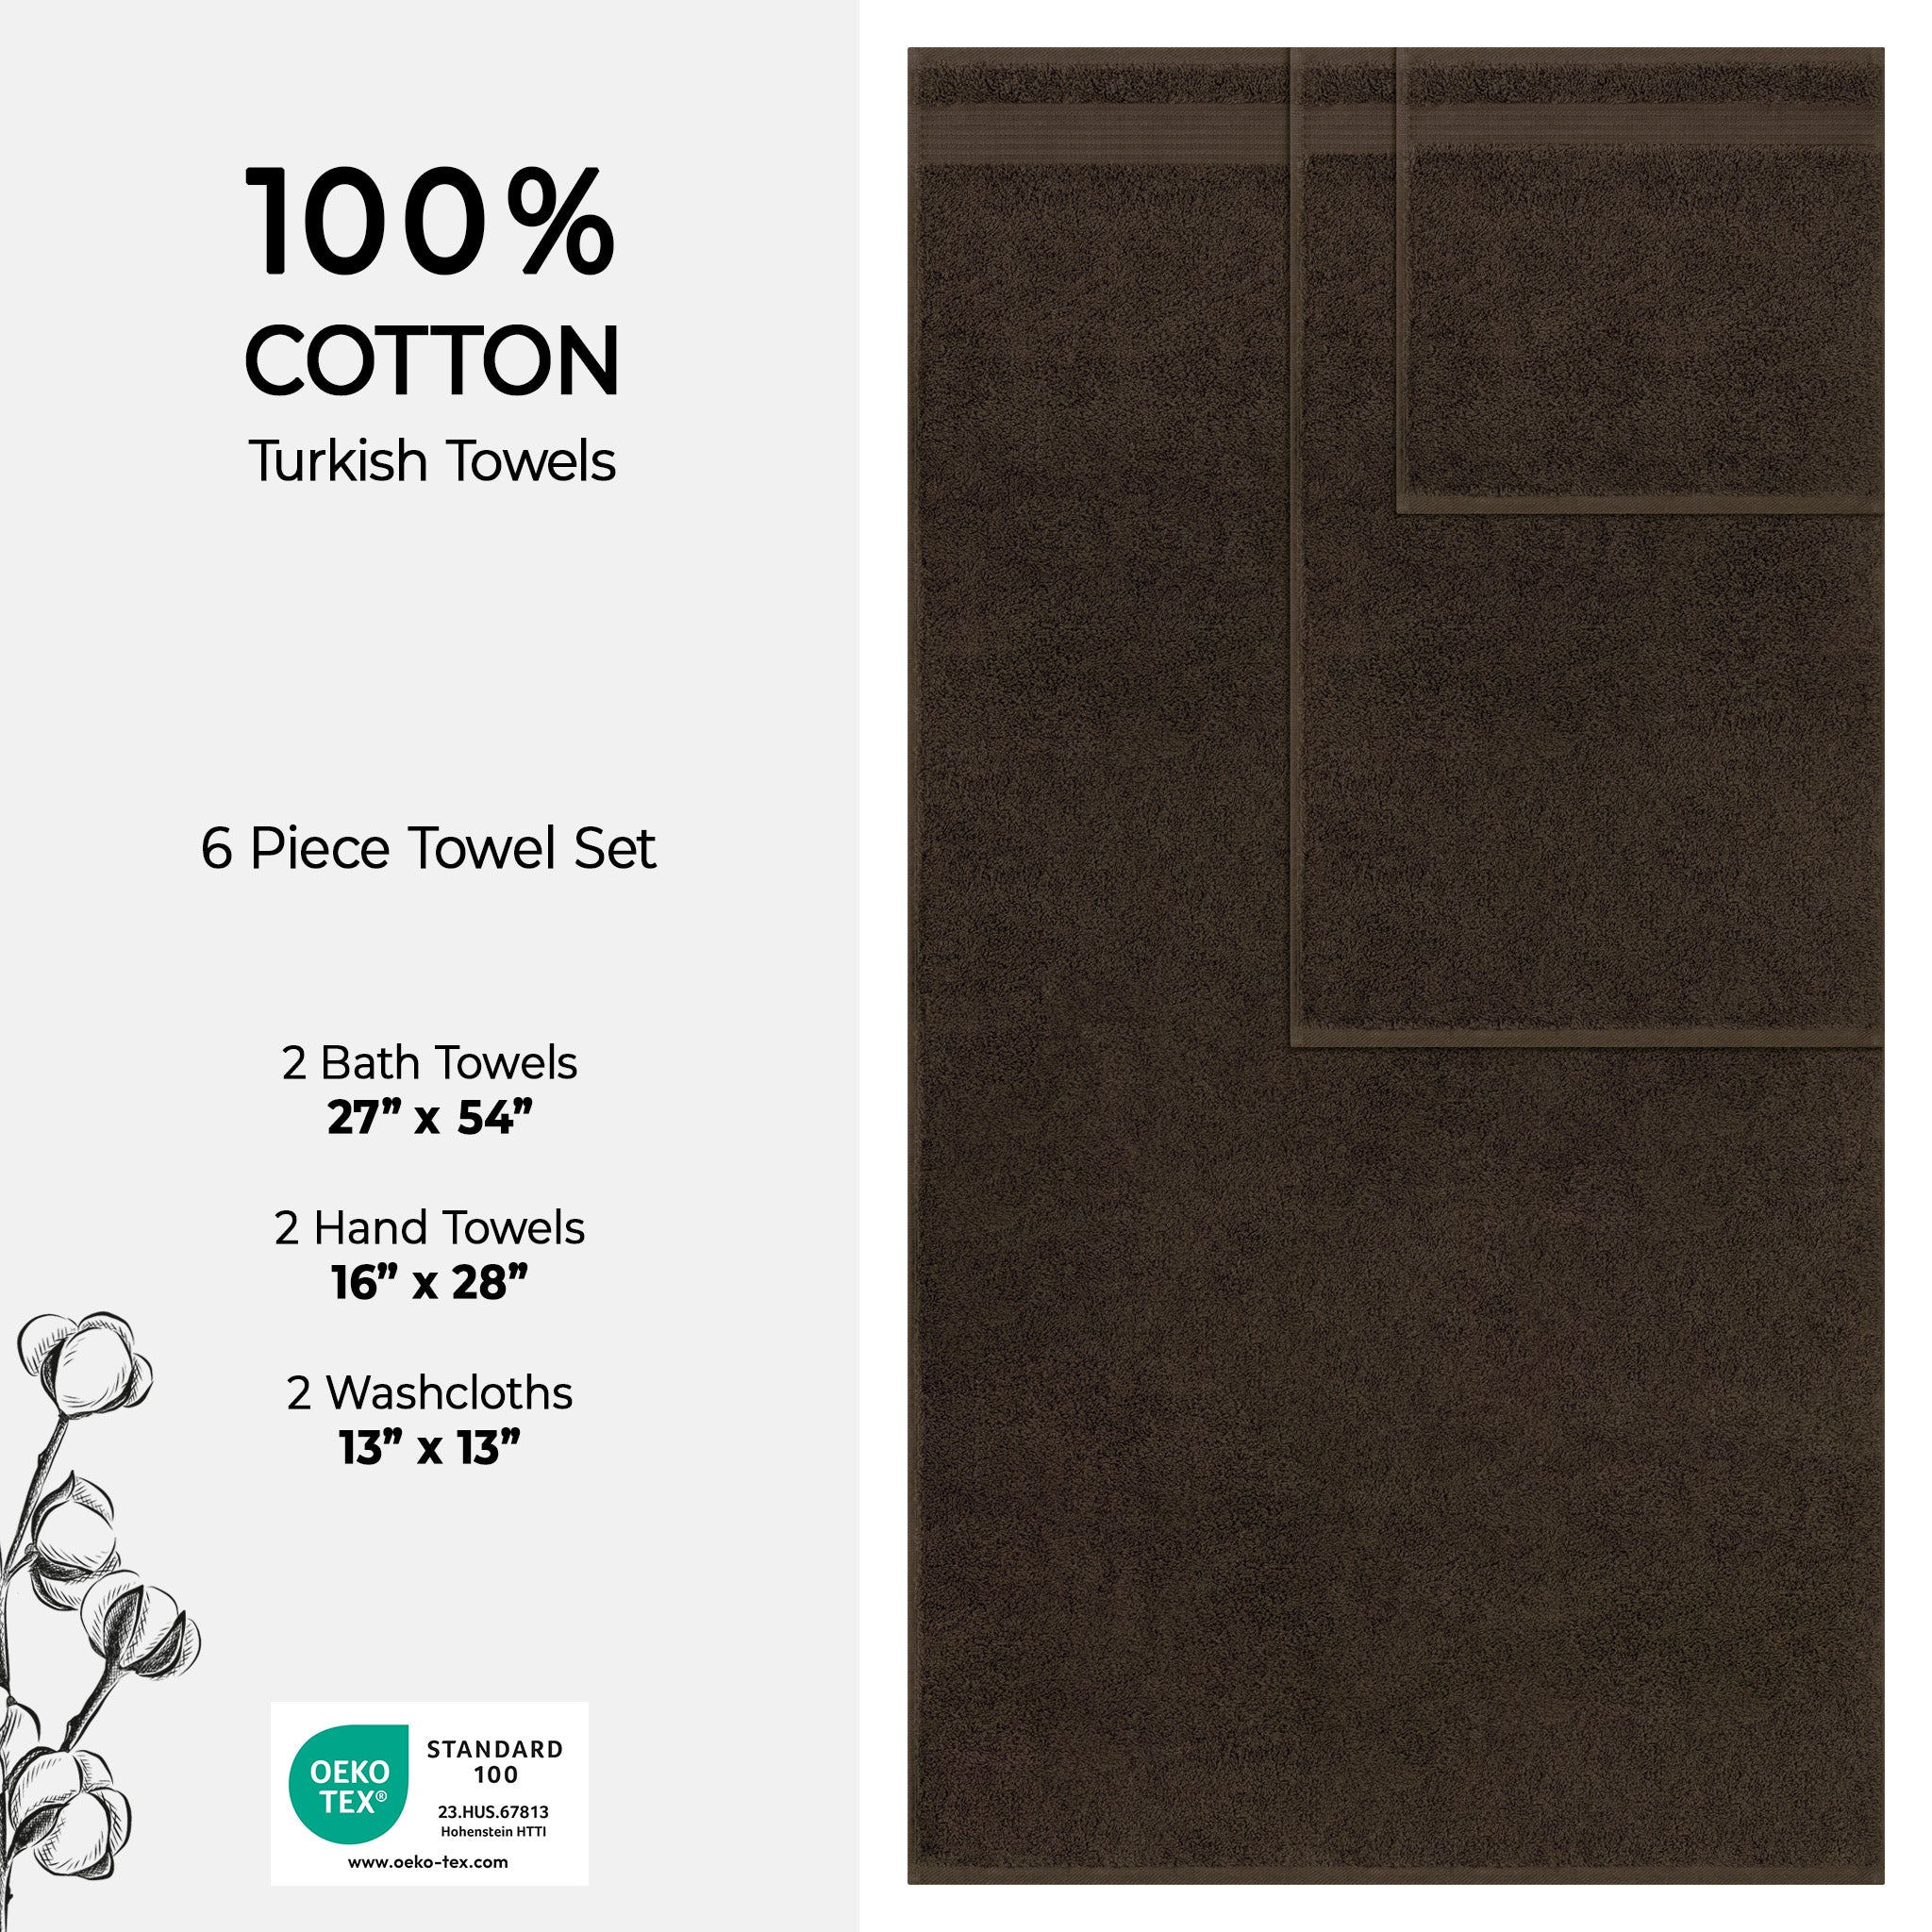 American Soft Linen Bekos 100% Cotton Turkish Towels 6 Piece Bath Towel Set -chocolate-brown-04